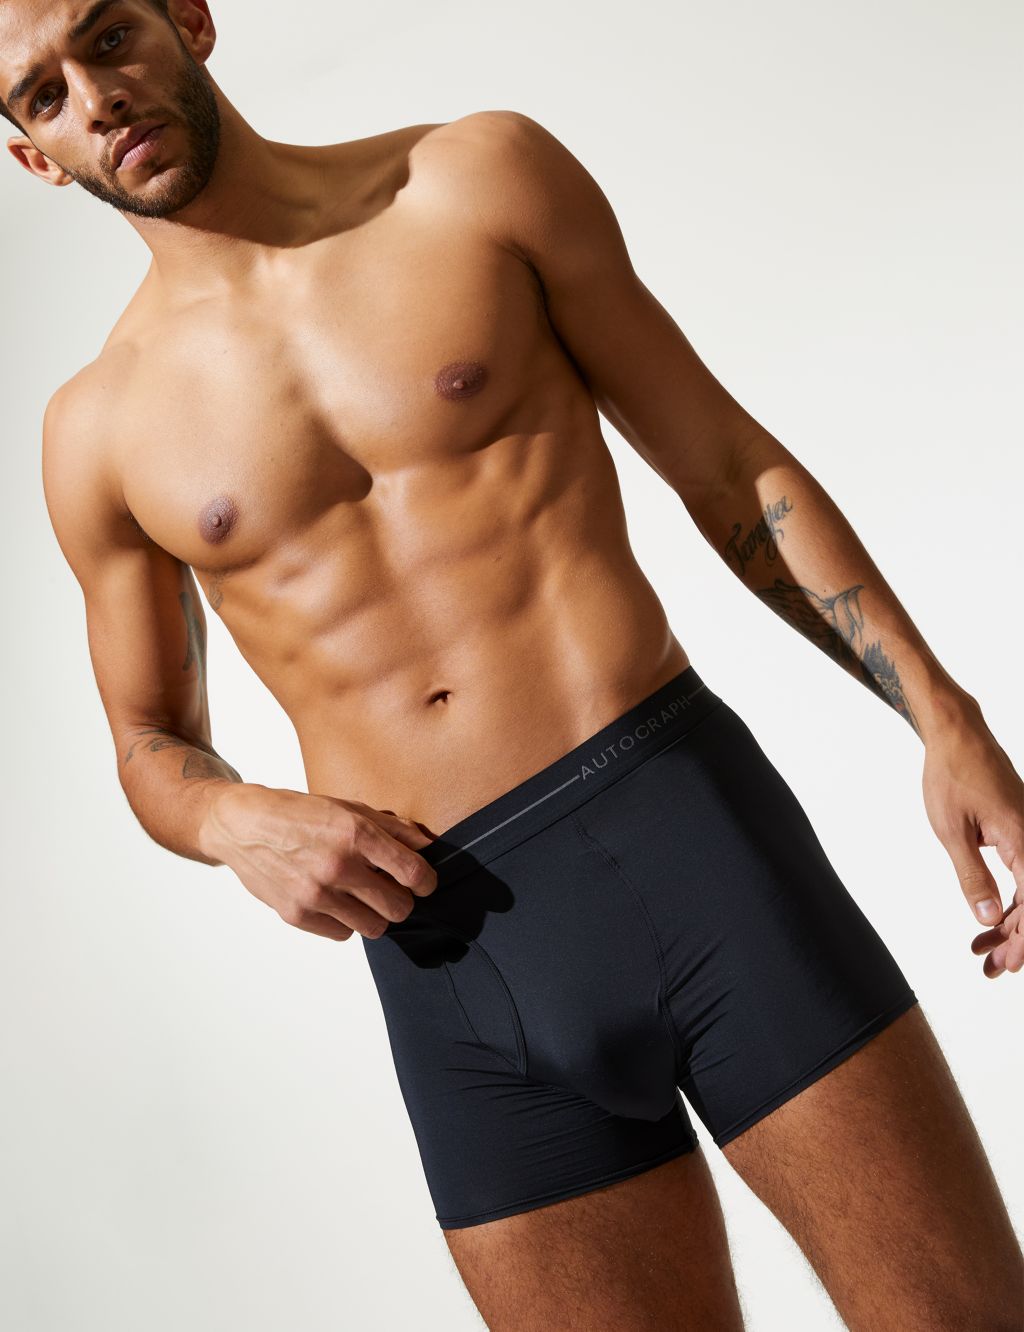 Undeez Vasectomy Jockstrap Underwear - With 2-Custom Fit Ice Packs